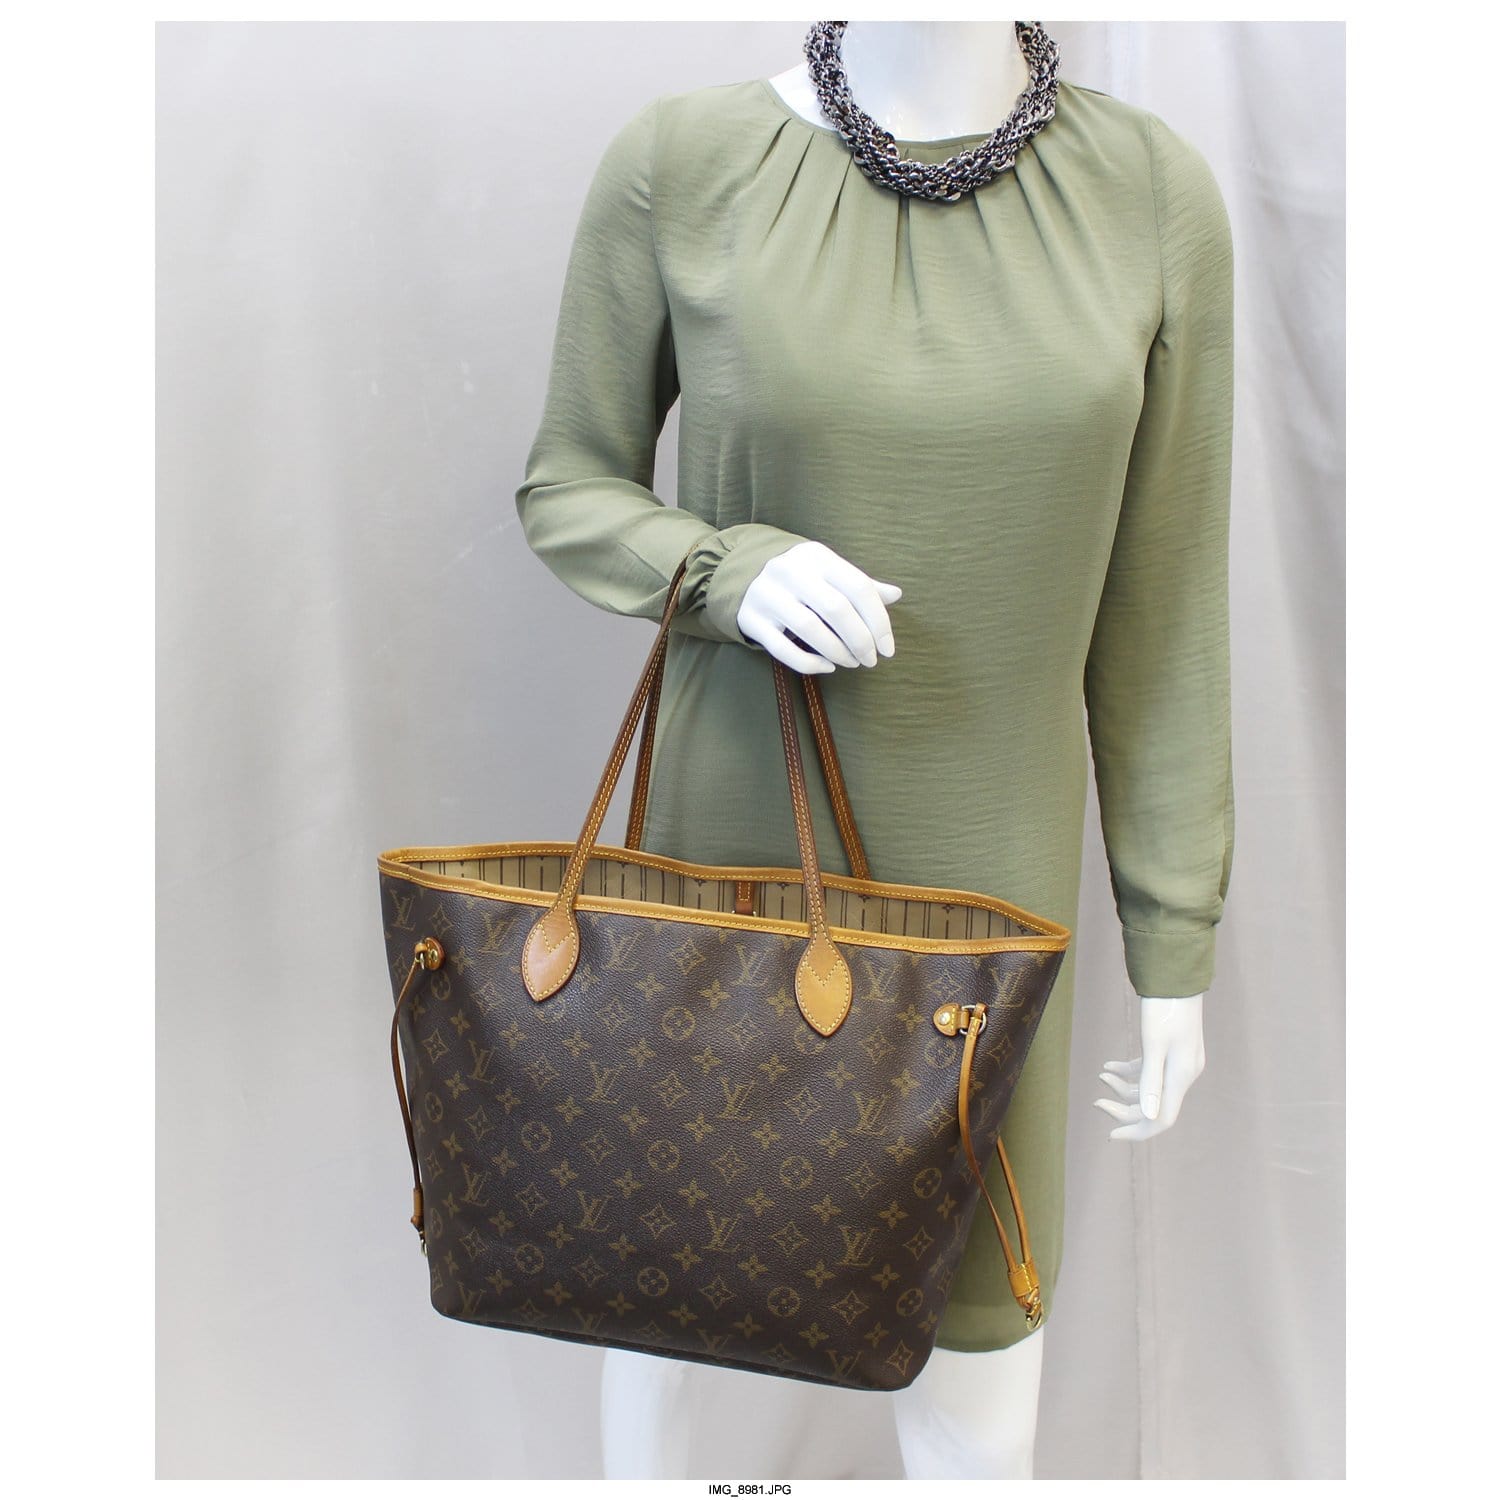 Louis Vuitton Neverfull Medium Model Shopping Bag in Brown Monogram